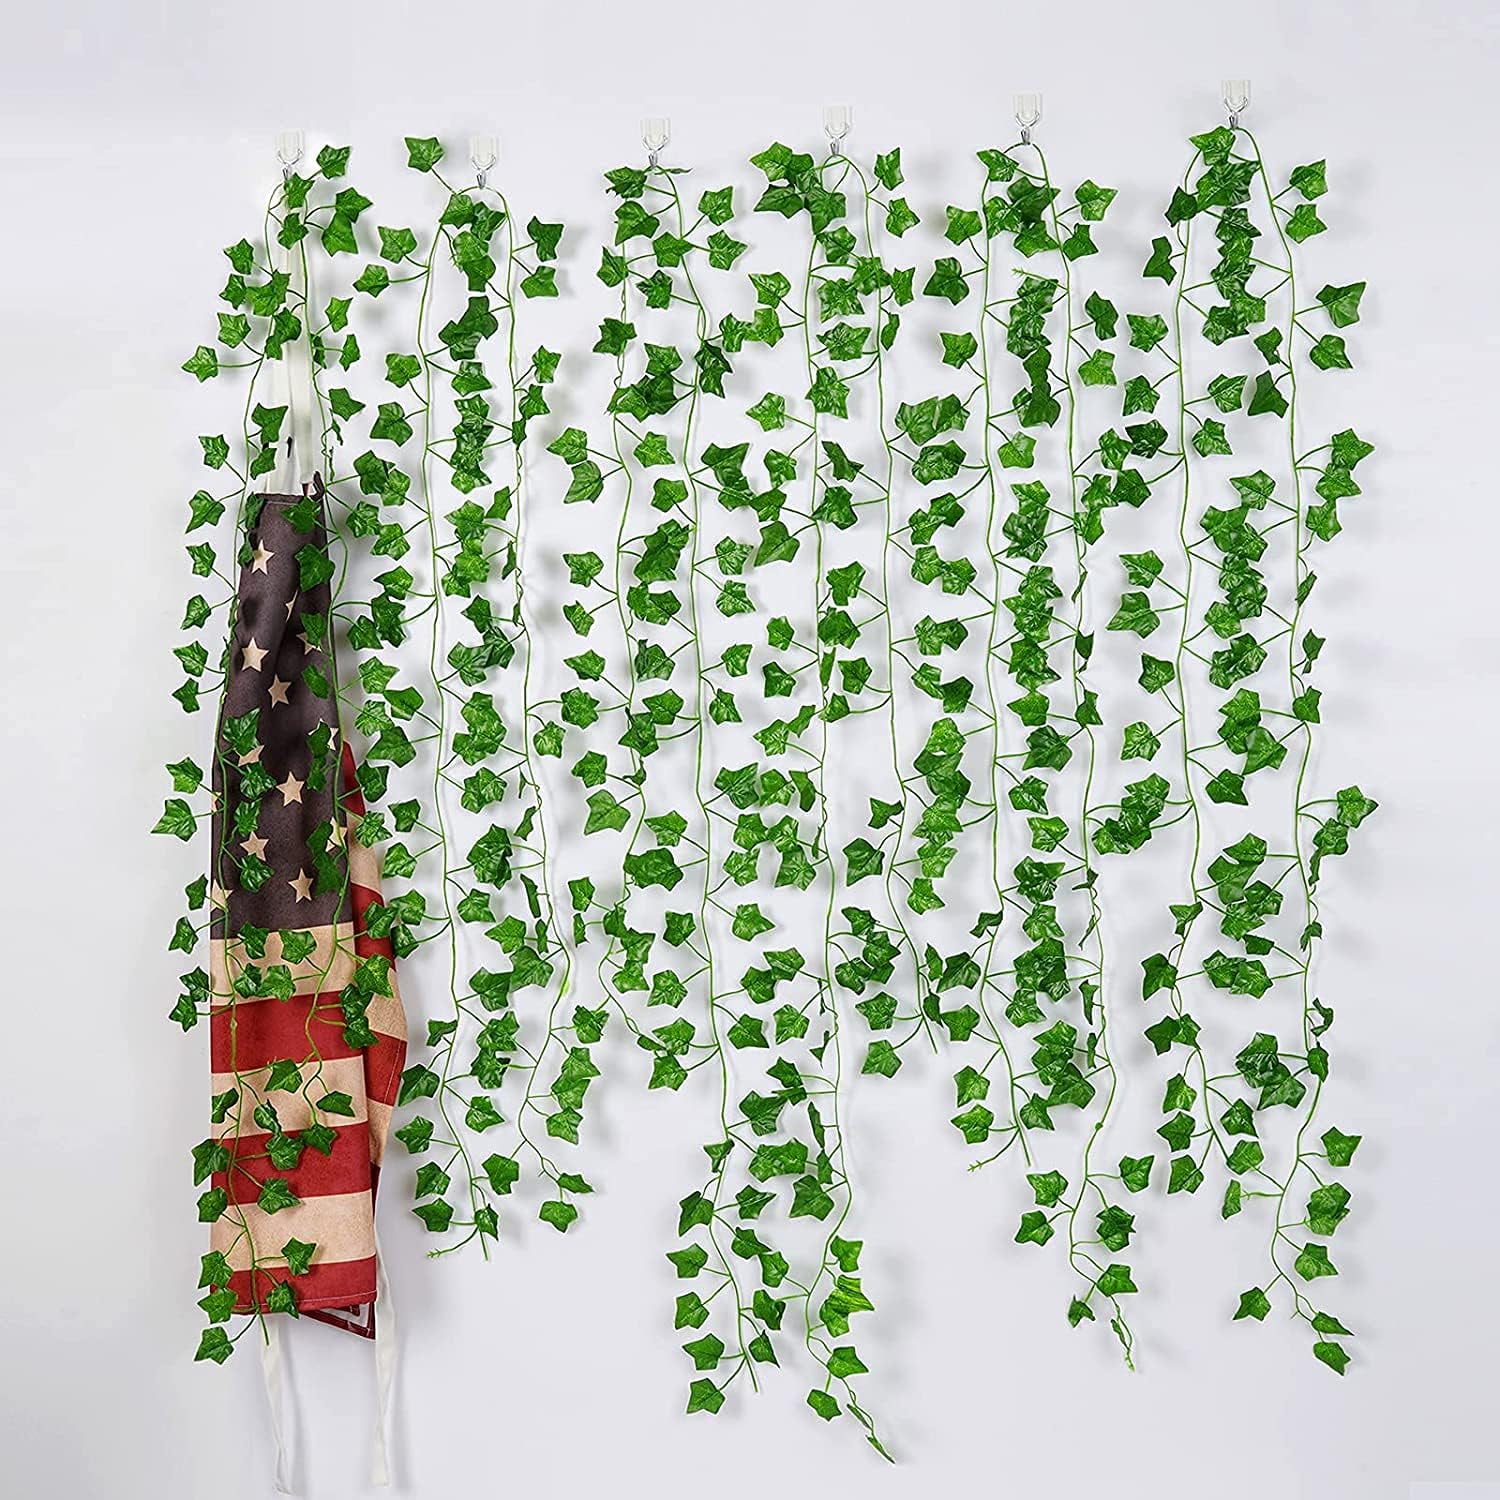 Lioobo Yards Artificial Ivy Garland Foliage Green Leaves Fake Vine Leaf Hanging Plants for Wedding Party DIY Headbands, Gold